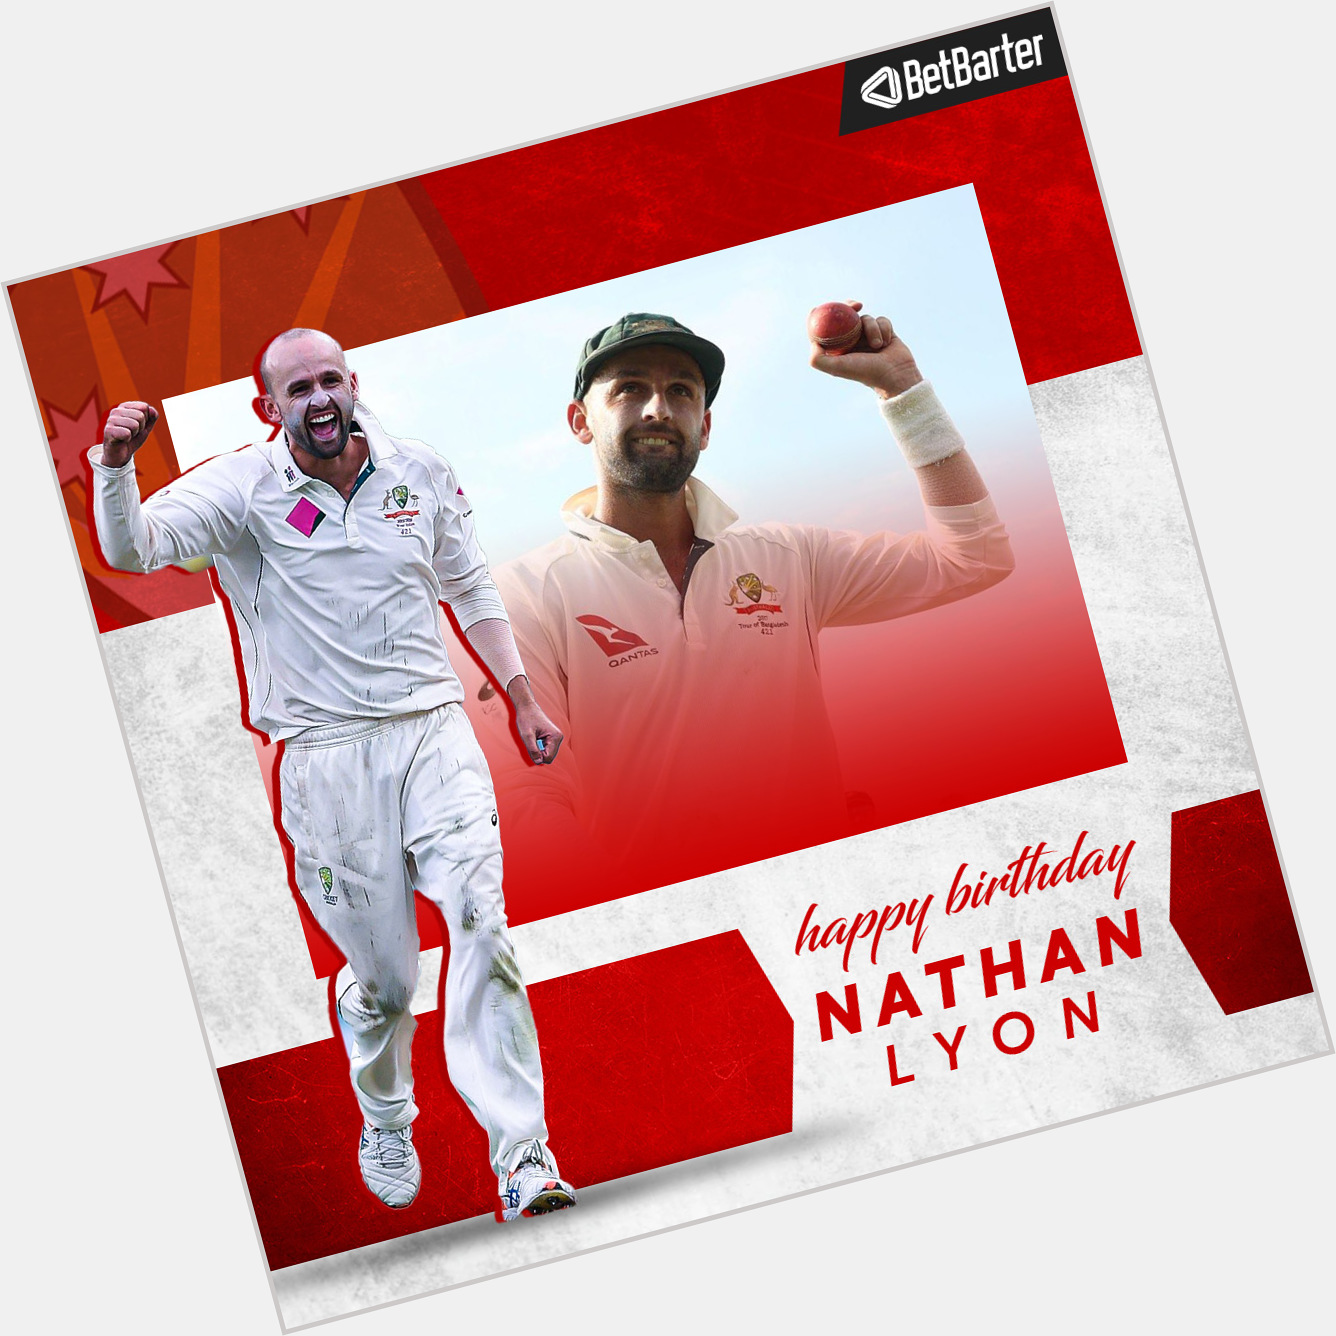 Wishing the Aussie legend Nathan Lyon a very Happy Birthday.   